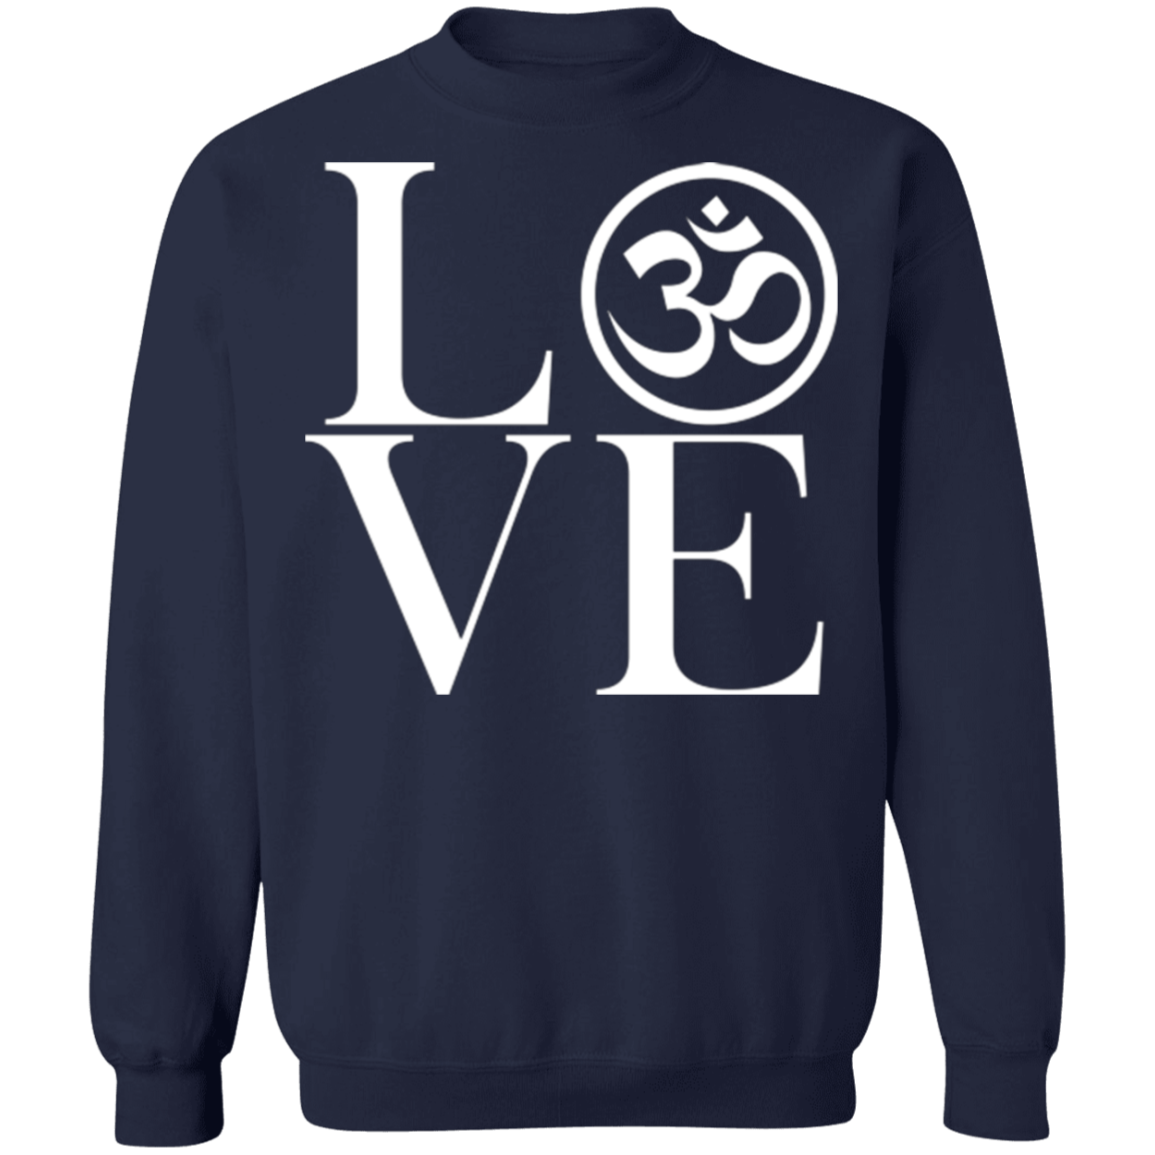 Love OM Pullover Sweatshirt - Free Shipping! - ZenCouragement.com